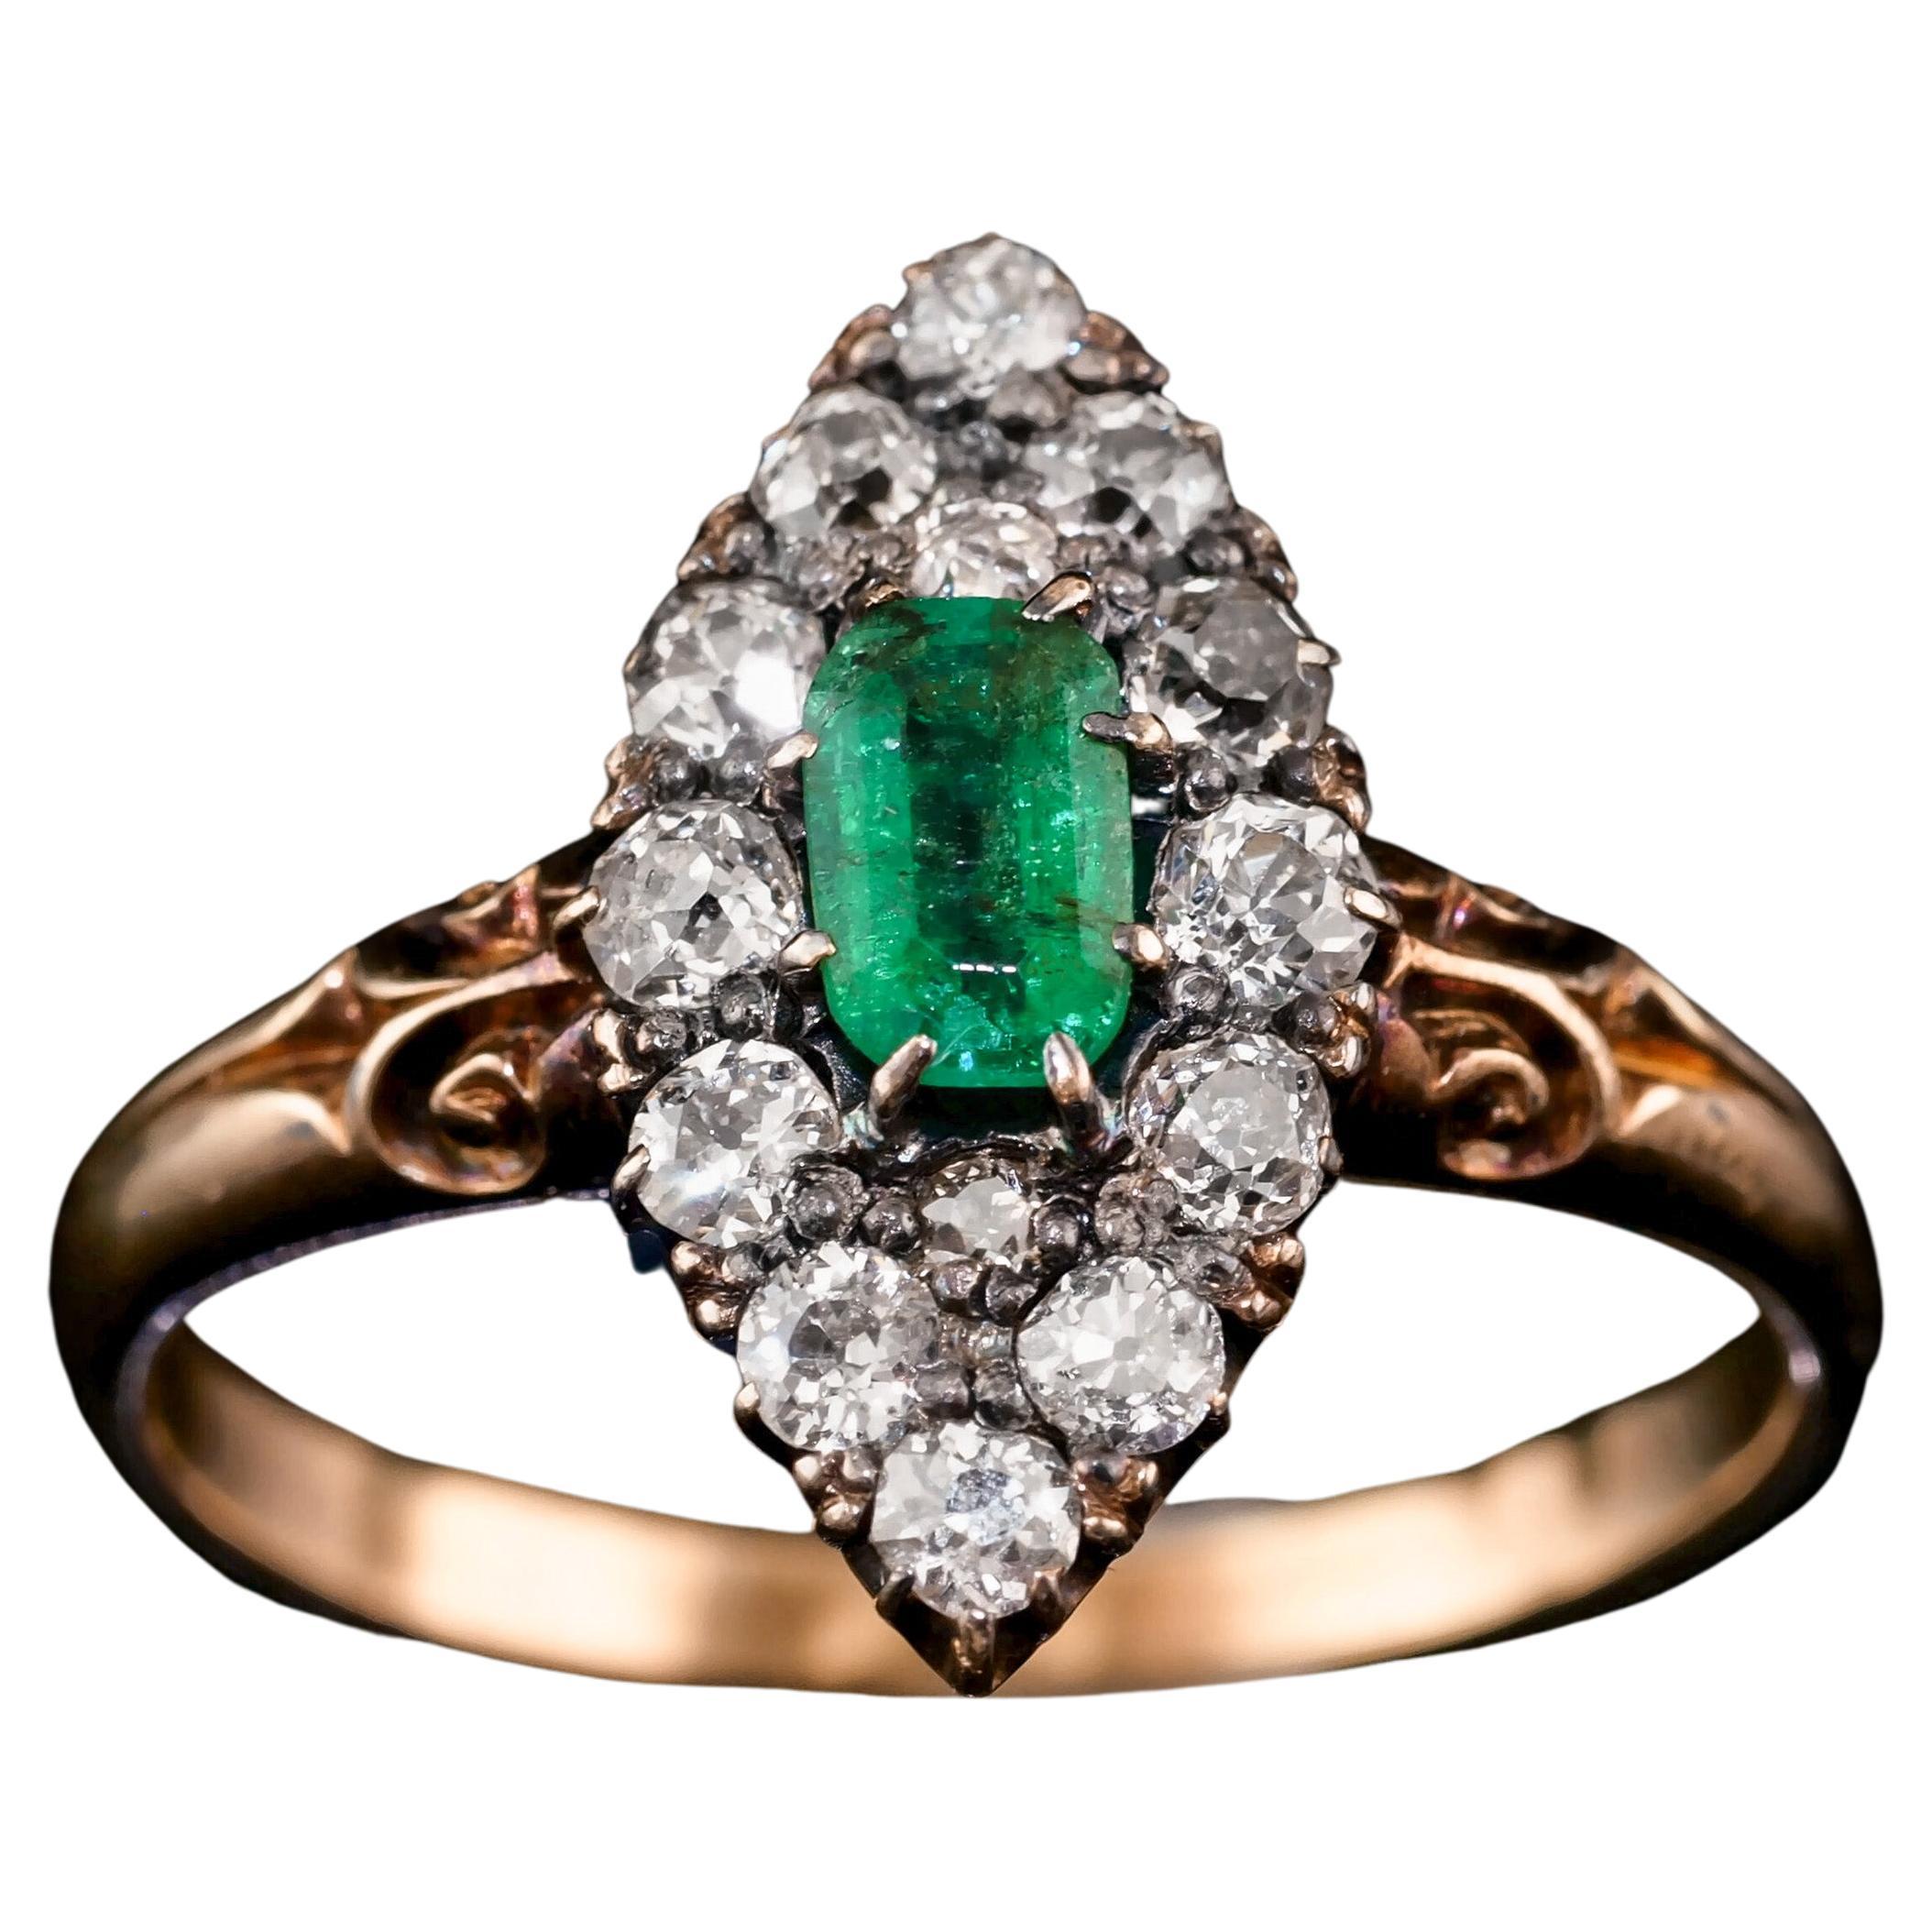 Antique Victorian 18K Gold Emerald & Diamond Navette Cluster Ring - c.1880